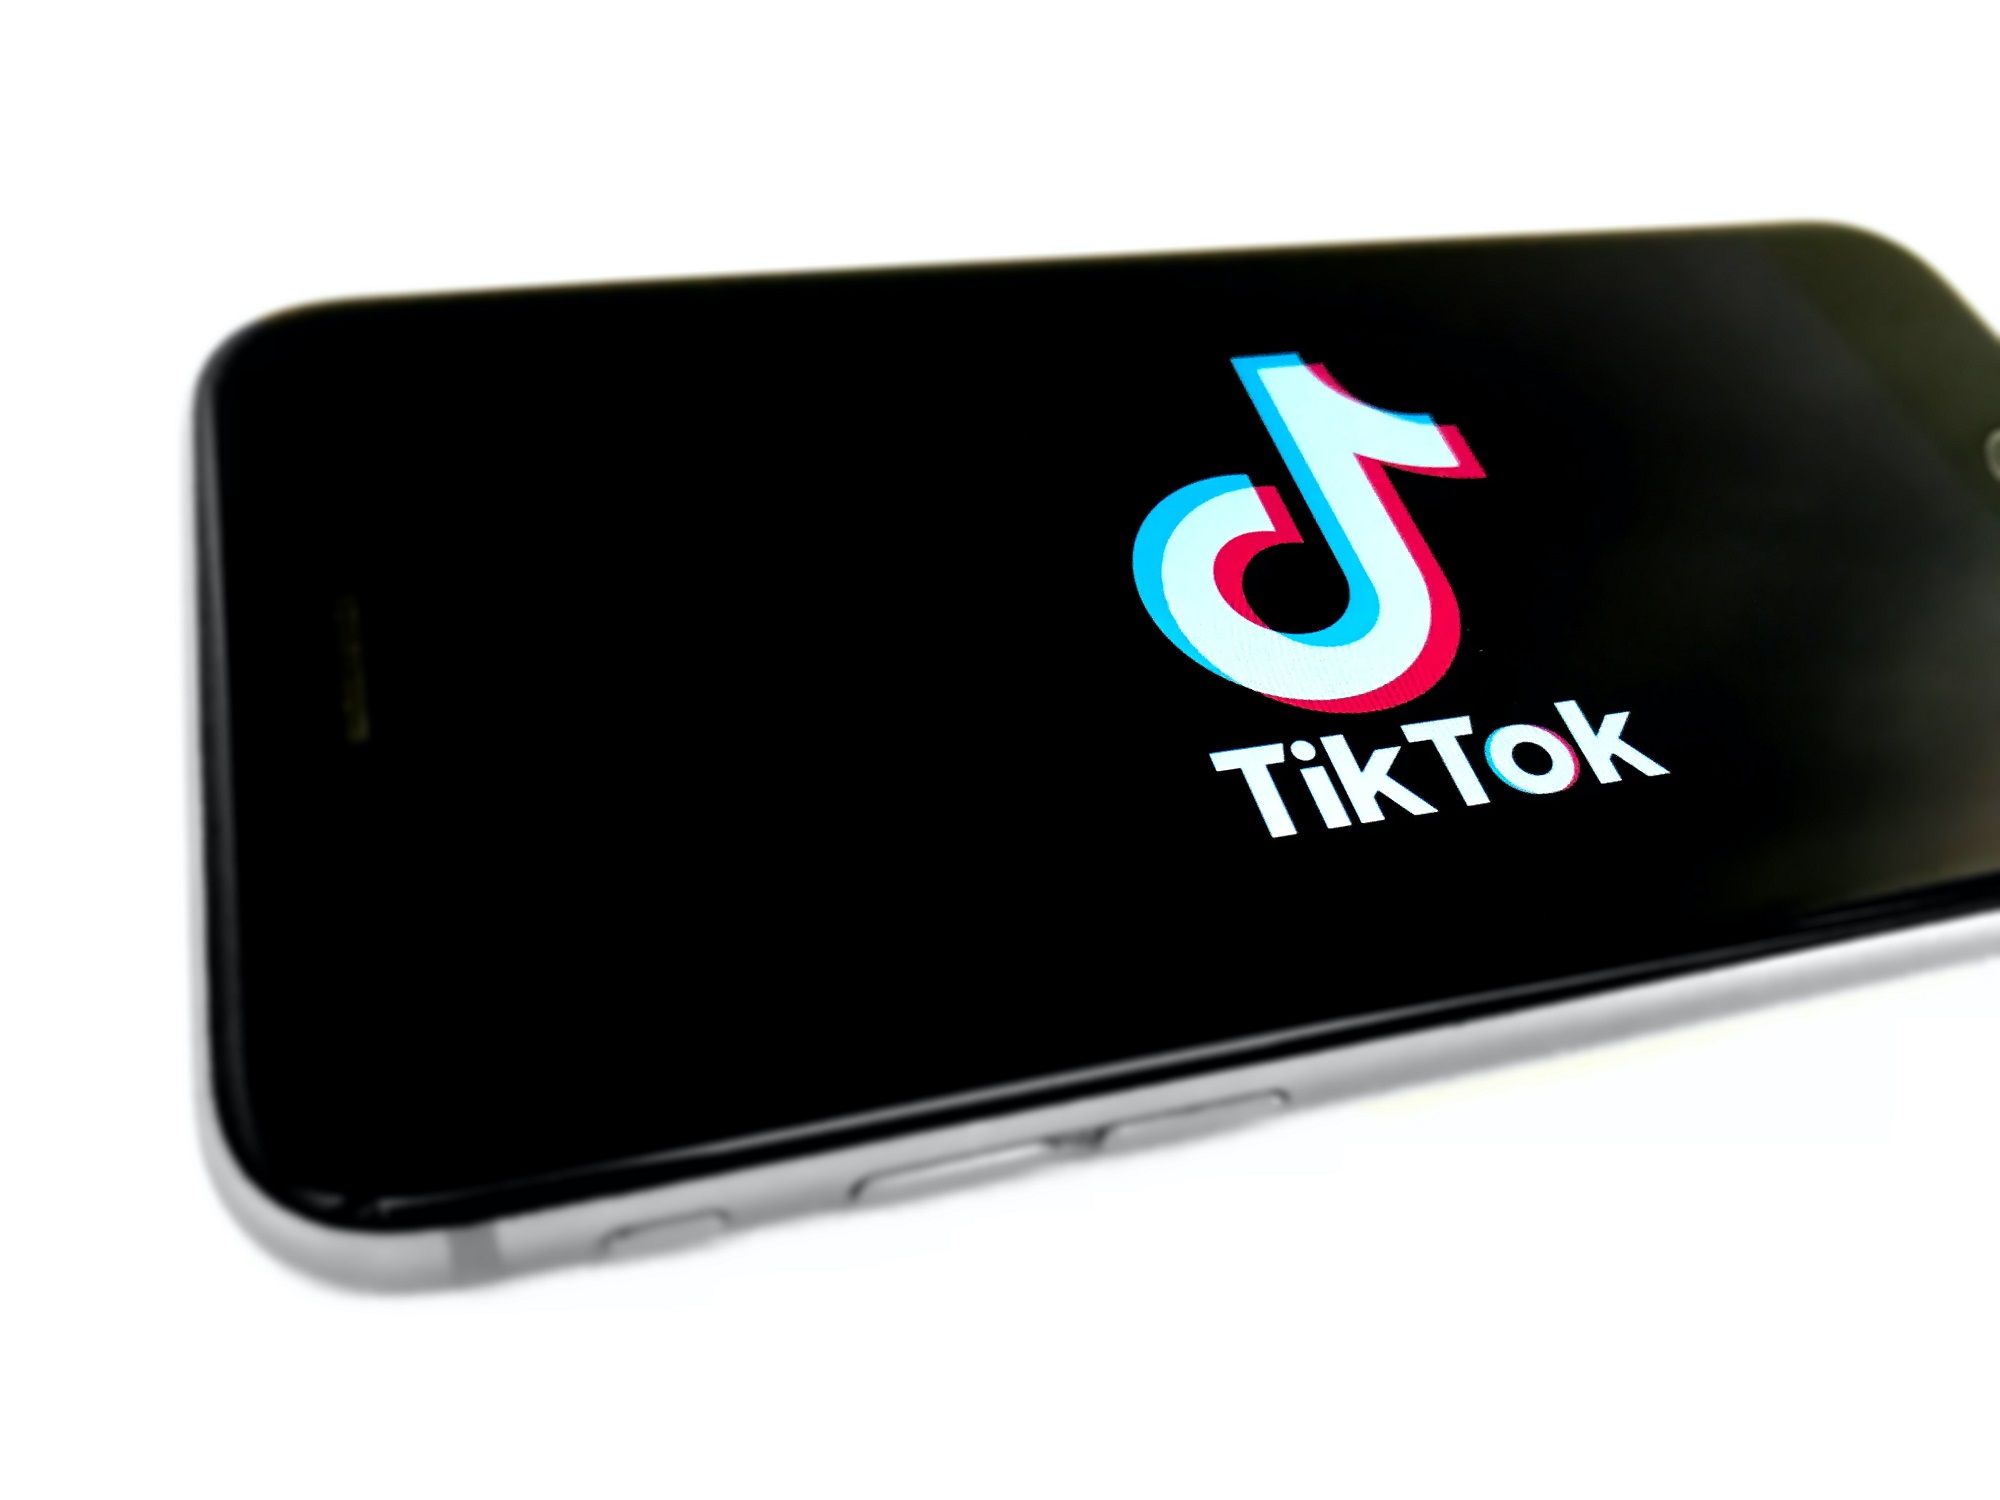 tiktok logo on smartphone